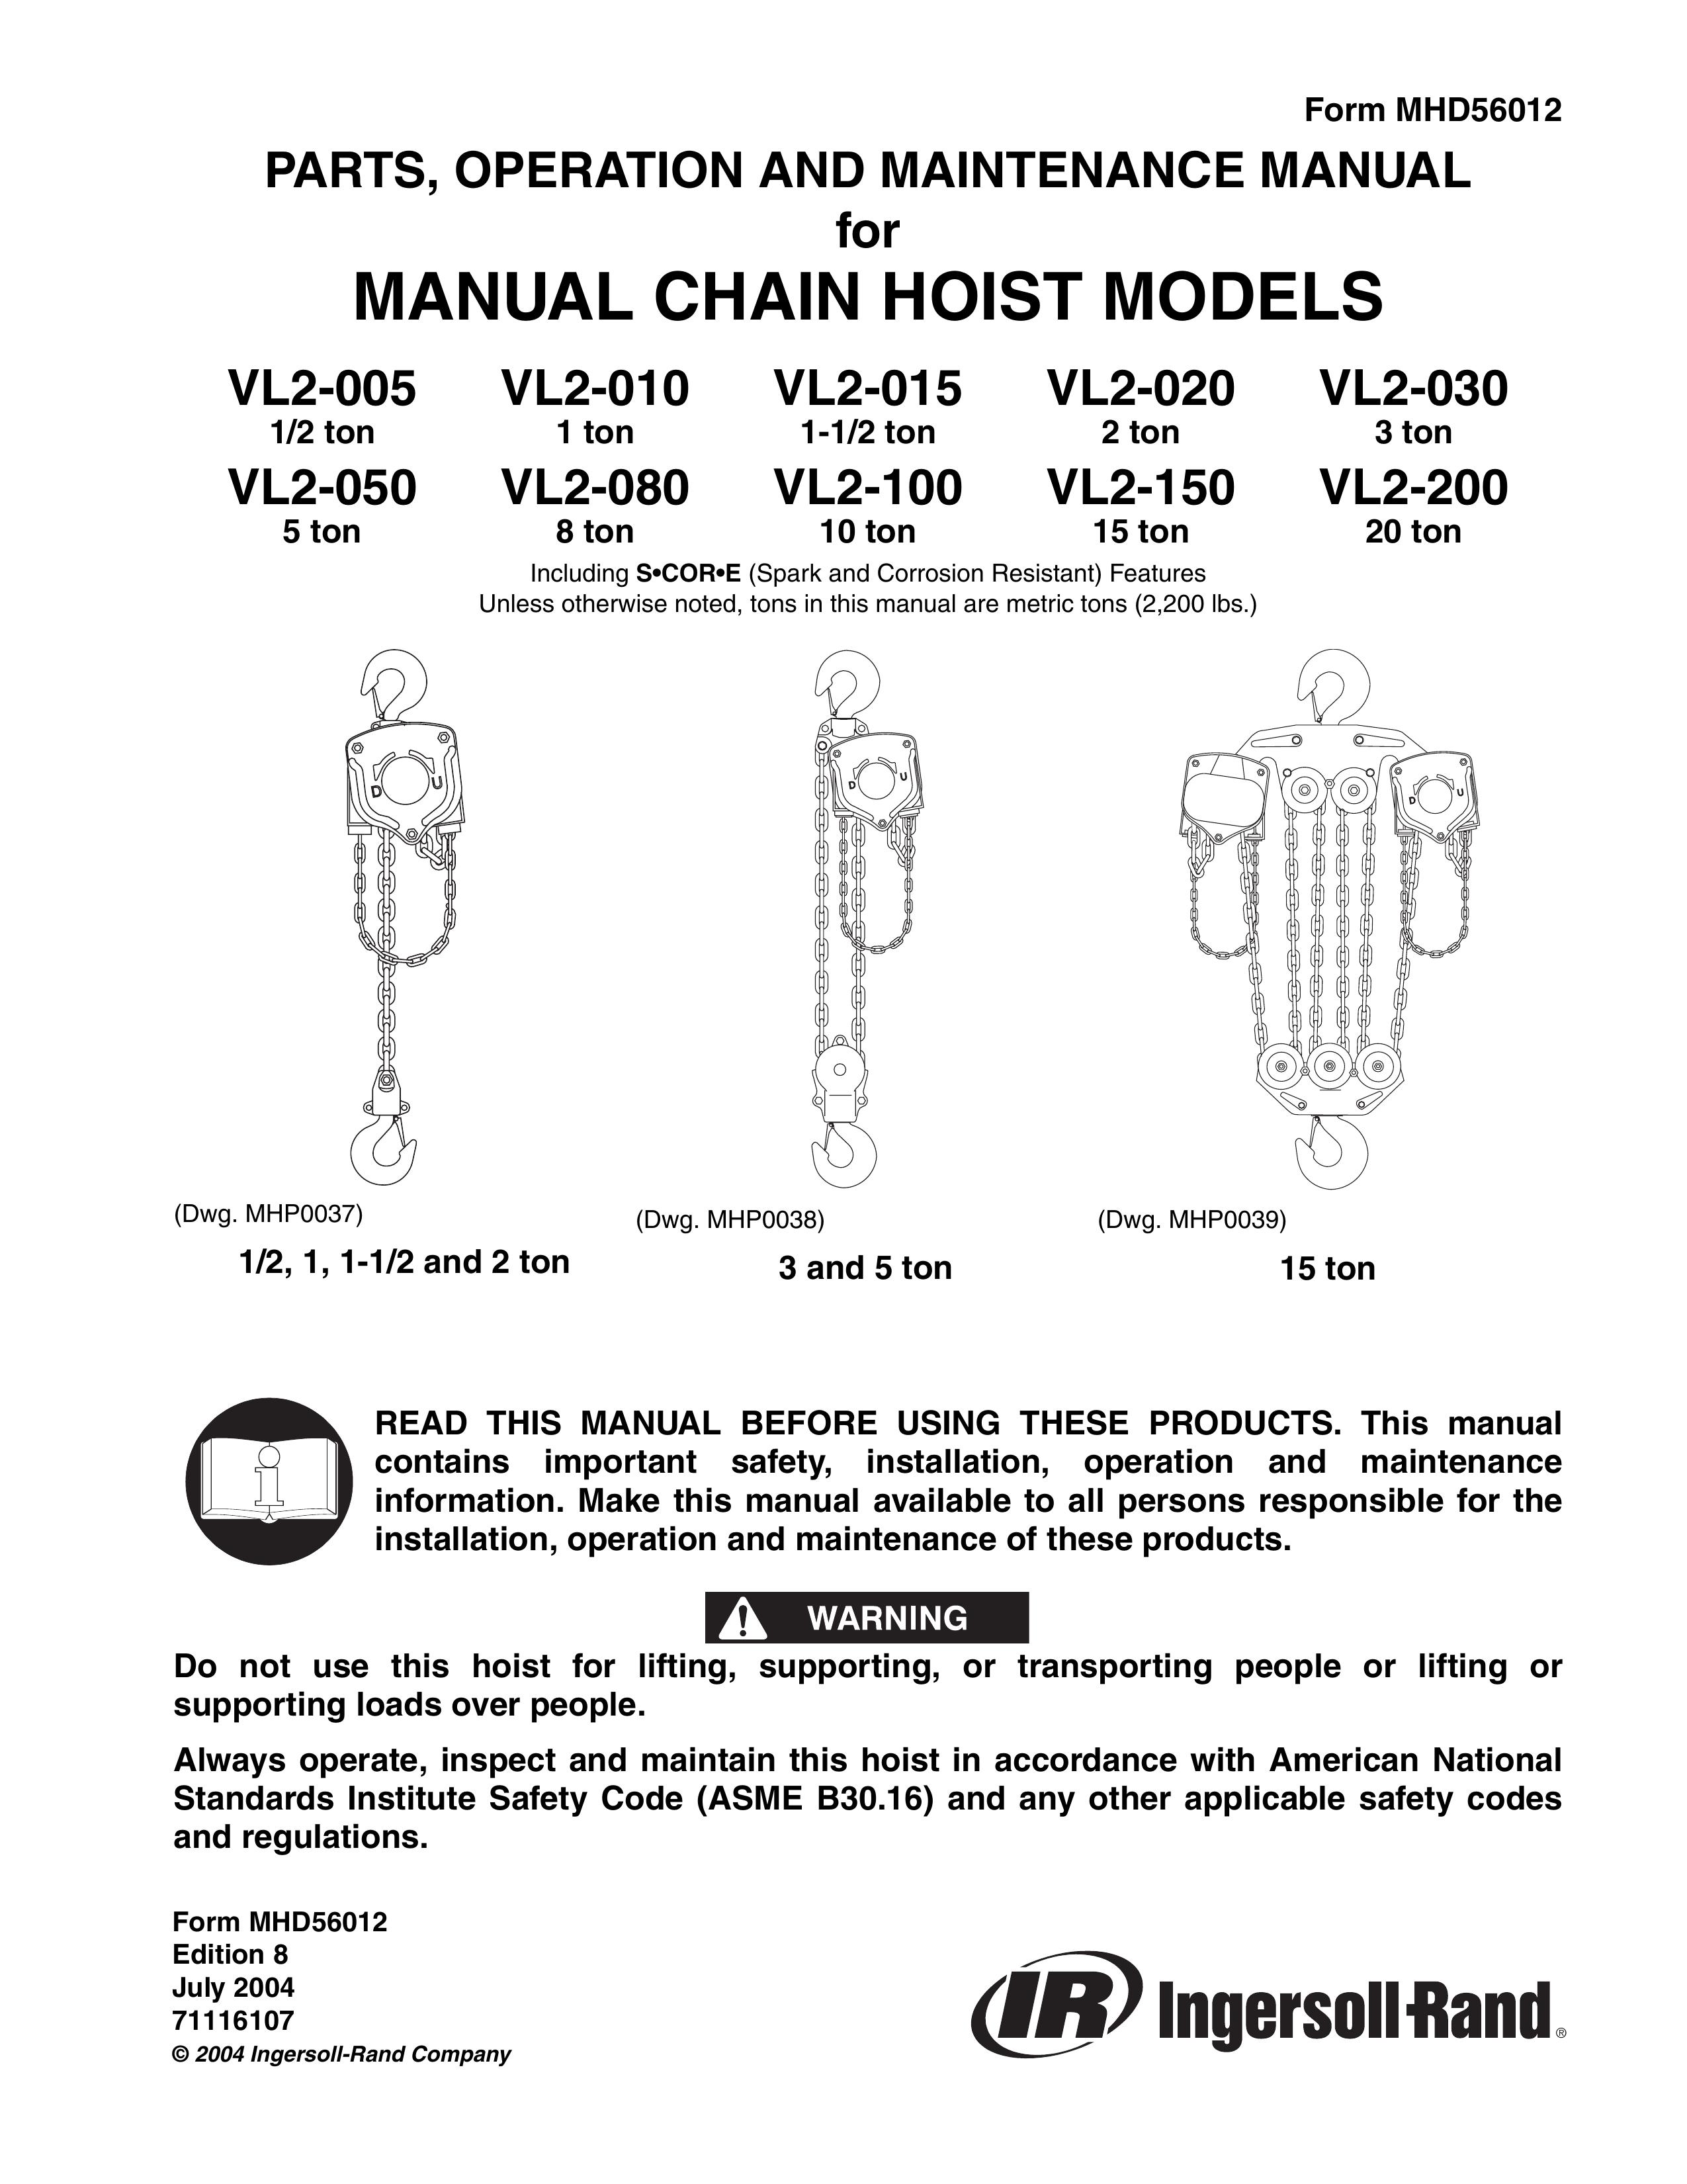 Ingersoll-Rand VL2-050 Digital Photo Keychain User Manual